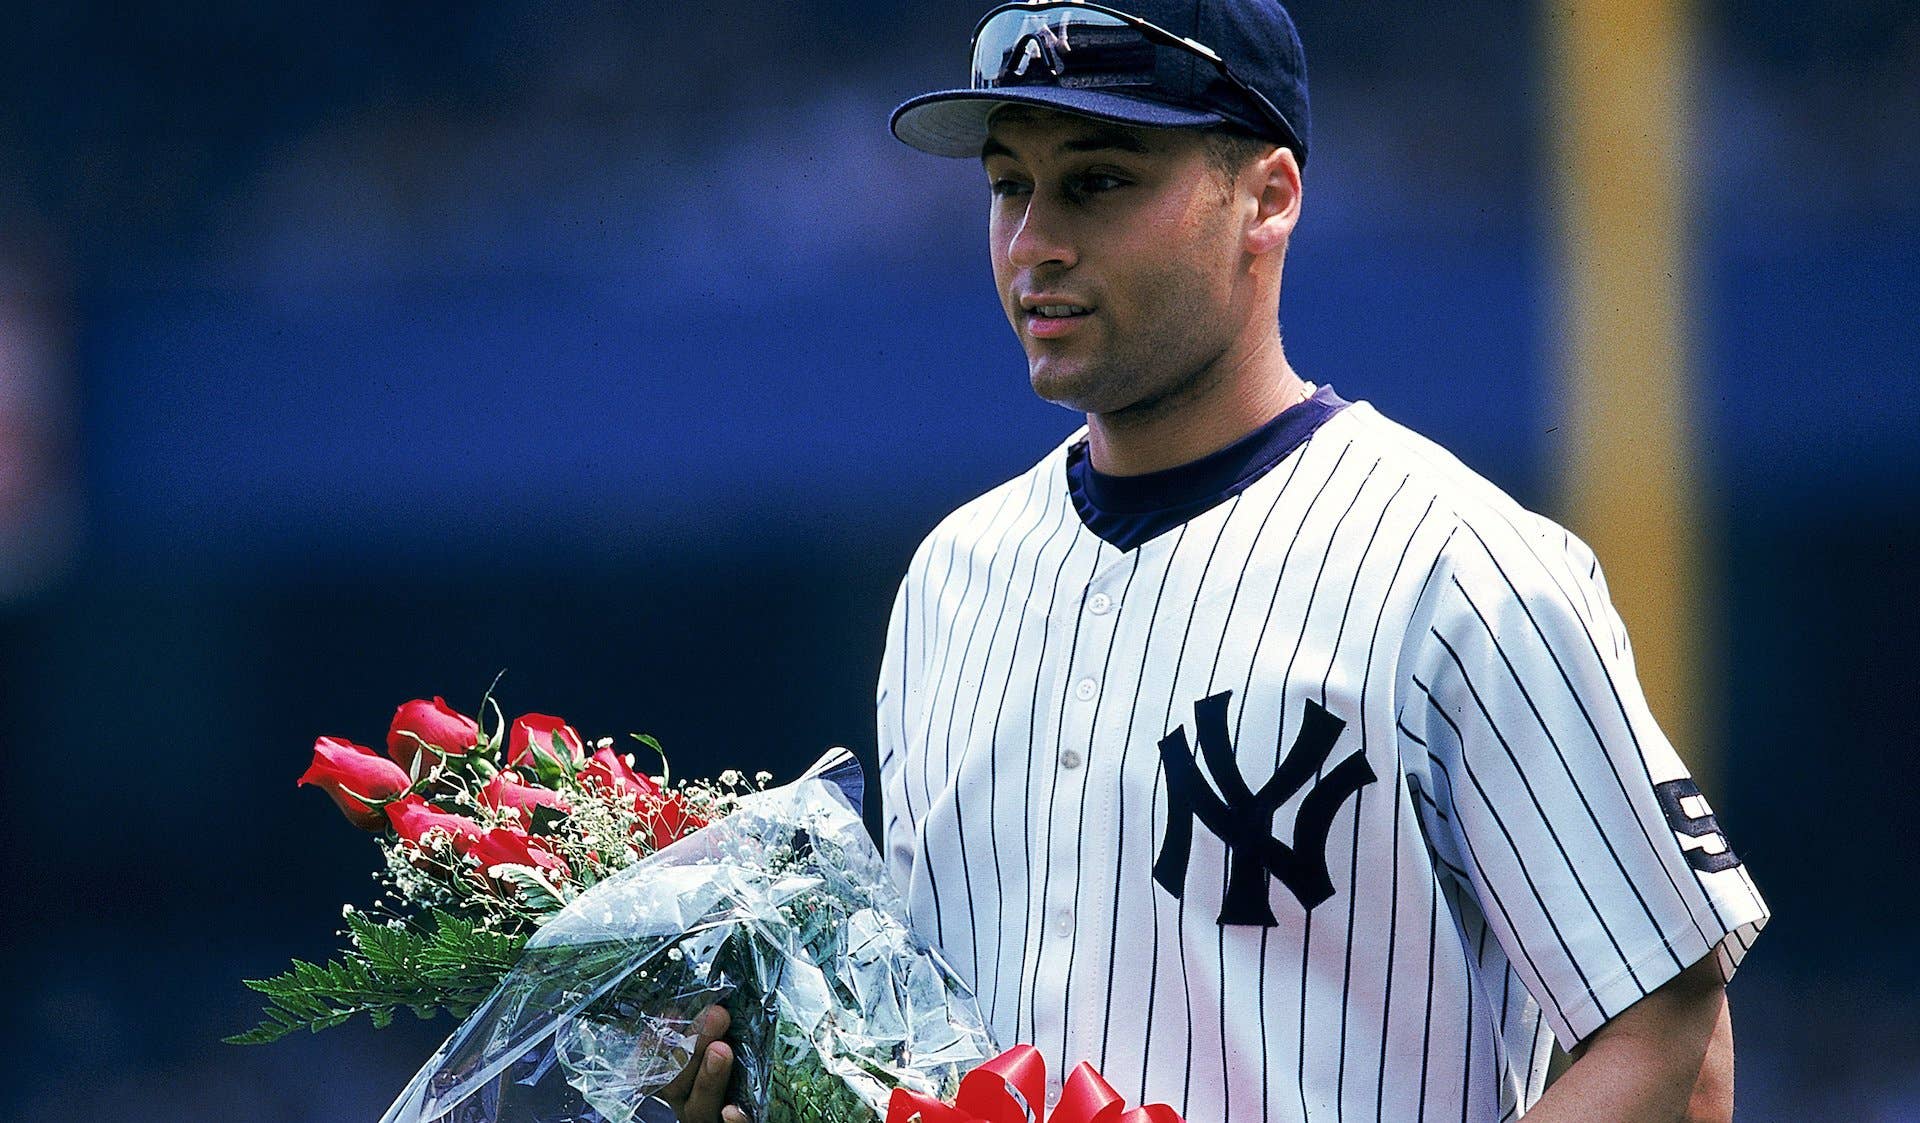 Derek Jeter during a New York Yankees game in 1999